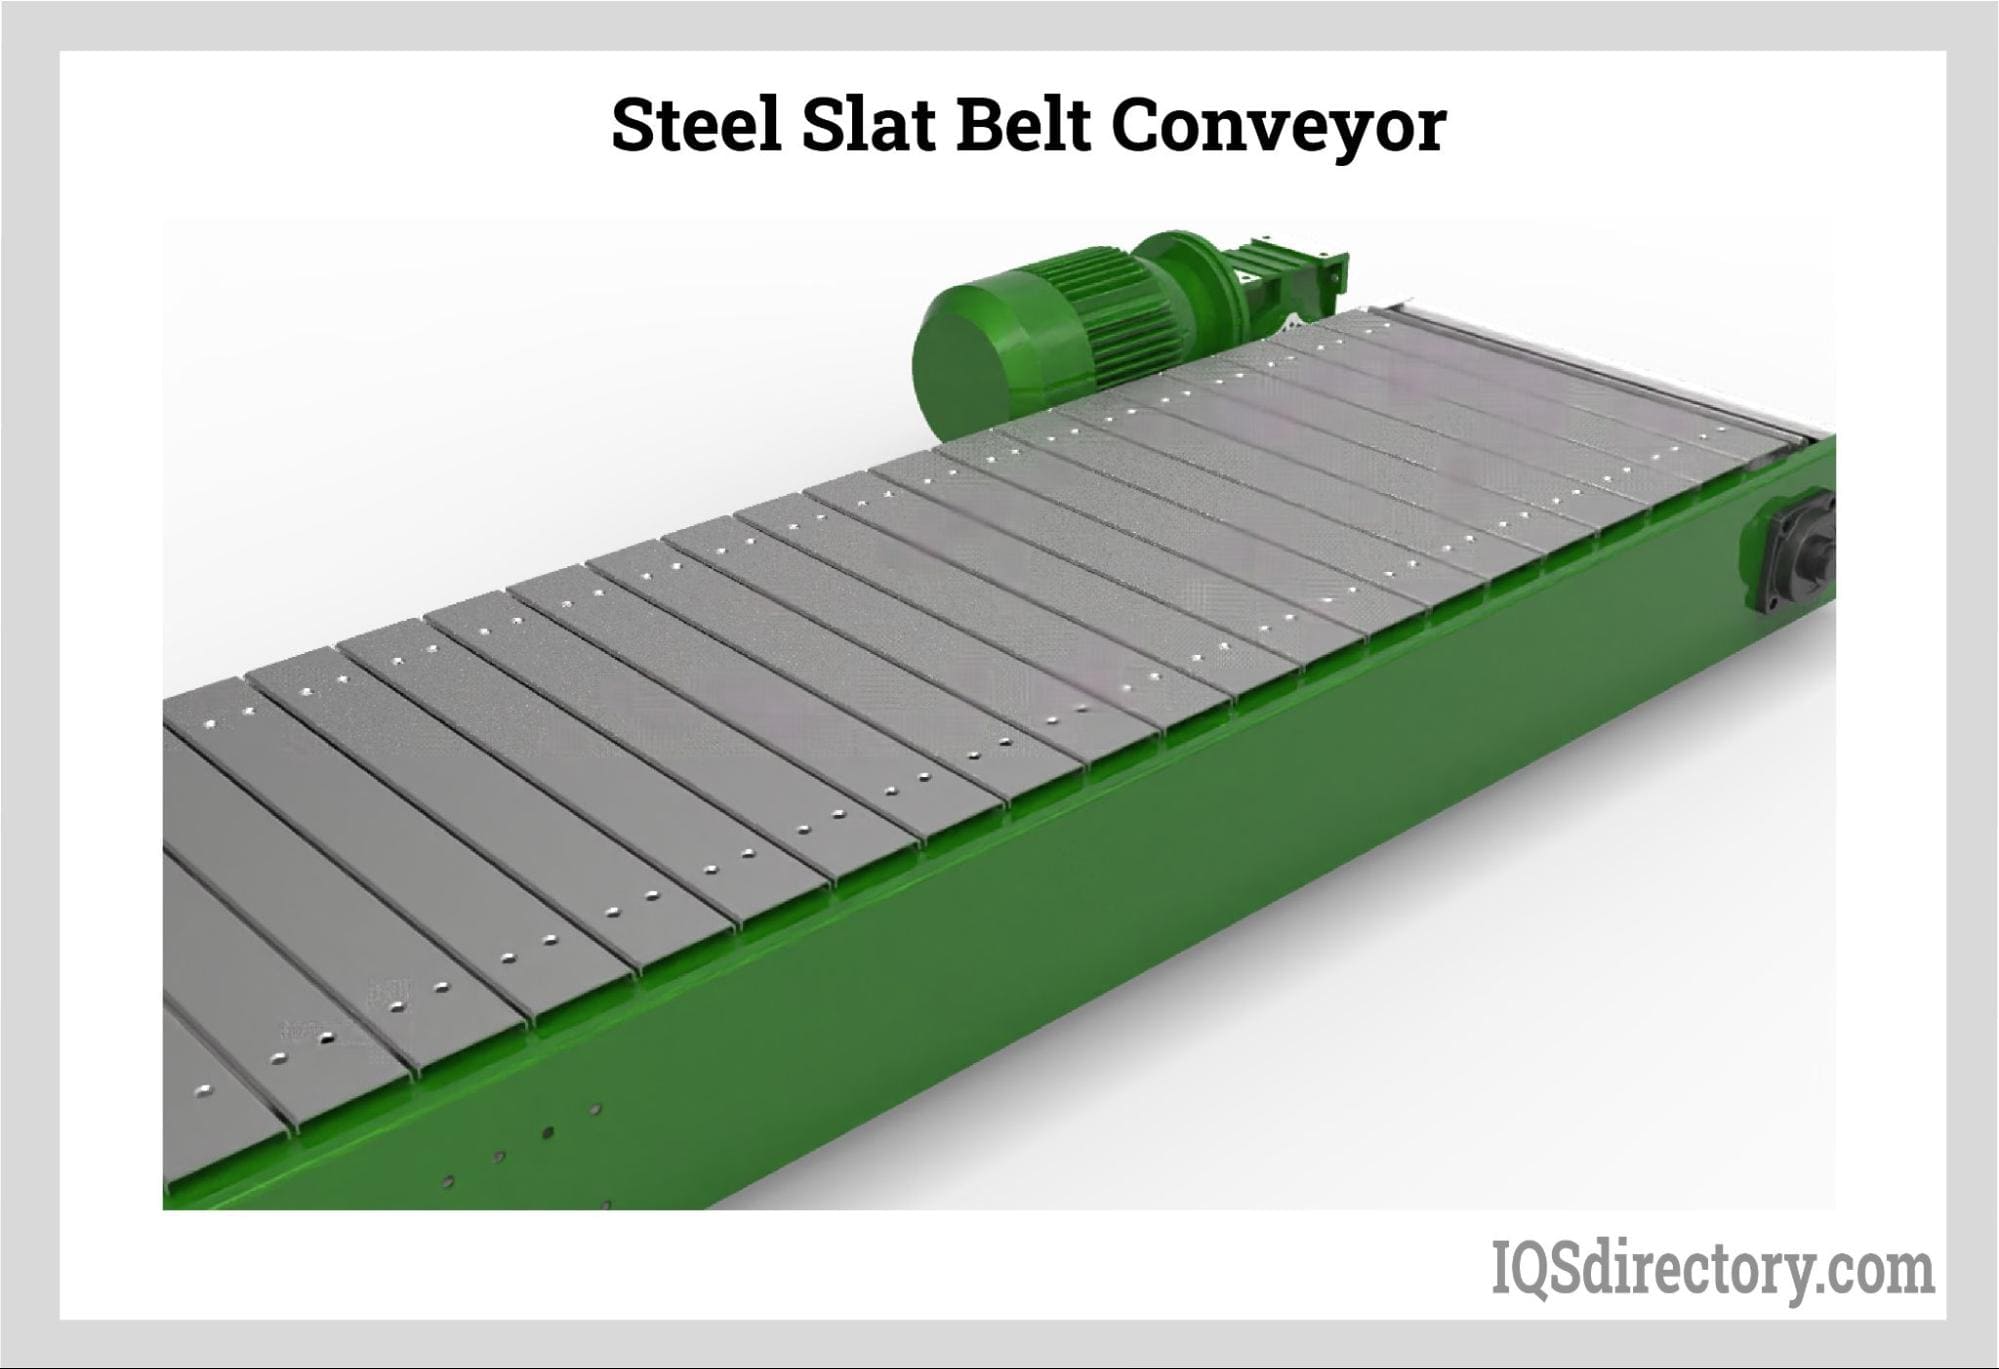 Steel Slat Belt Conveyor